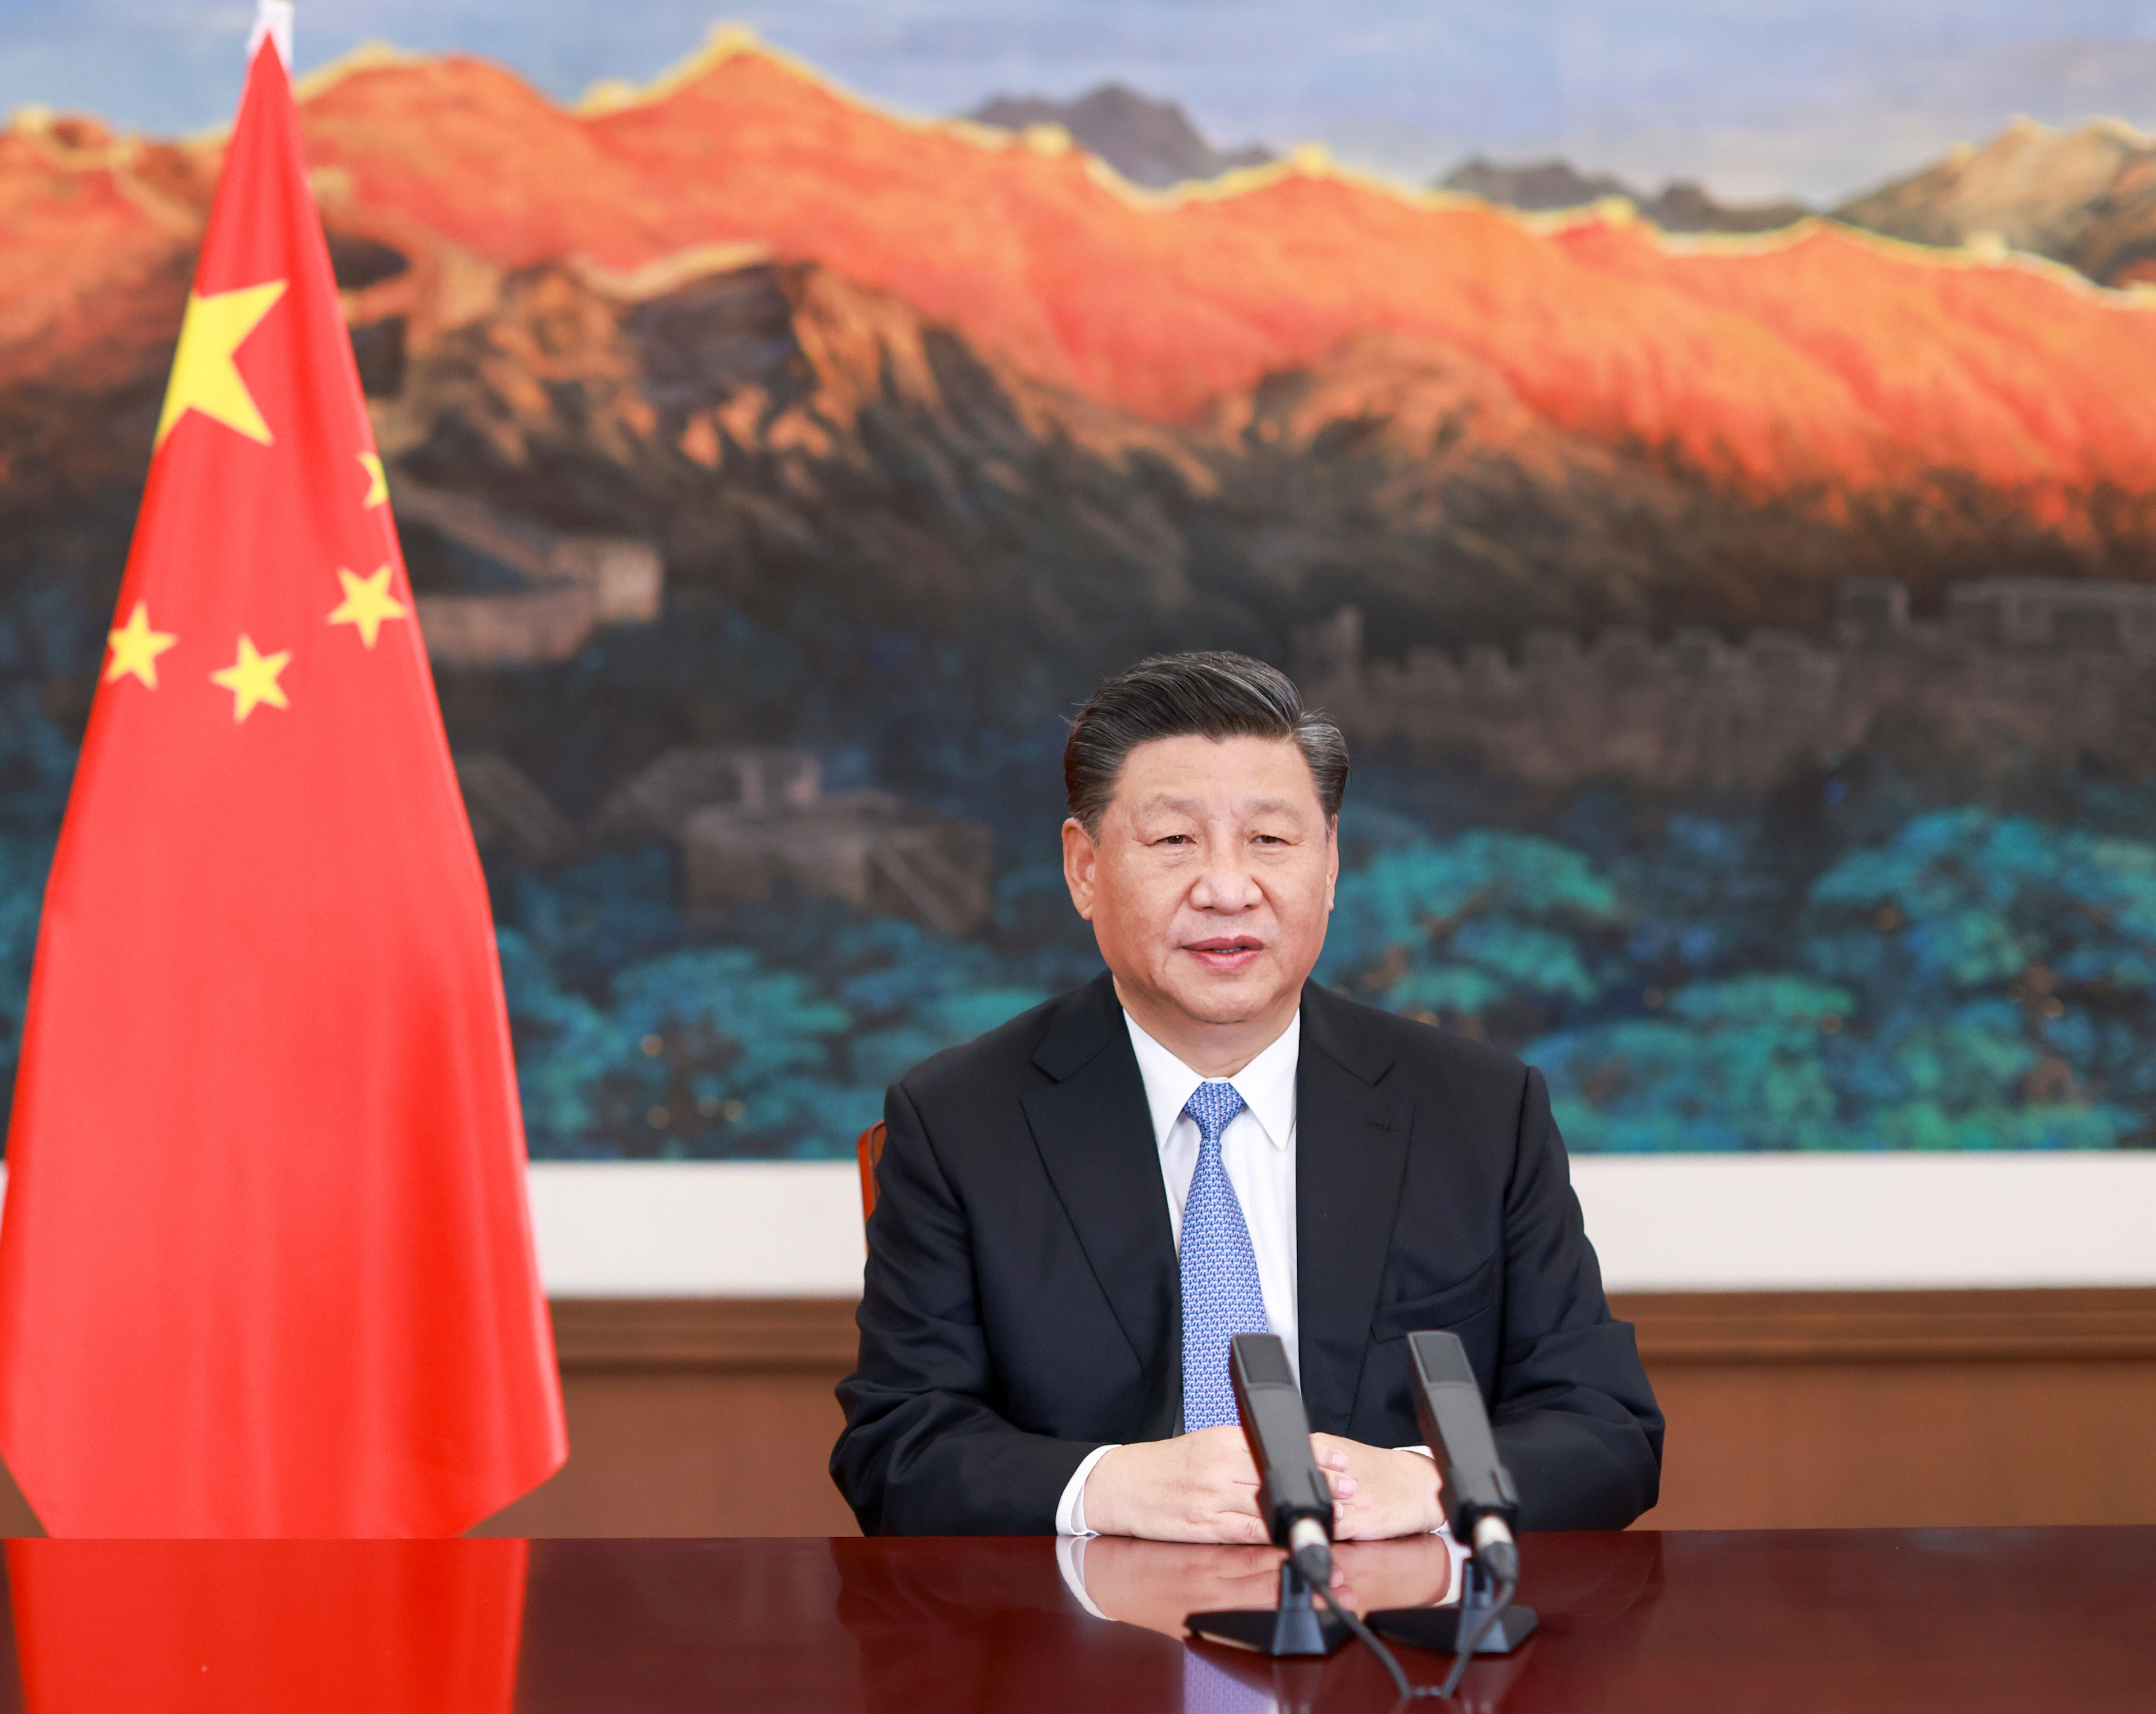 Chinese Leader Xi Jinping Finally Congratulates Biden